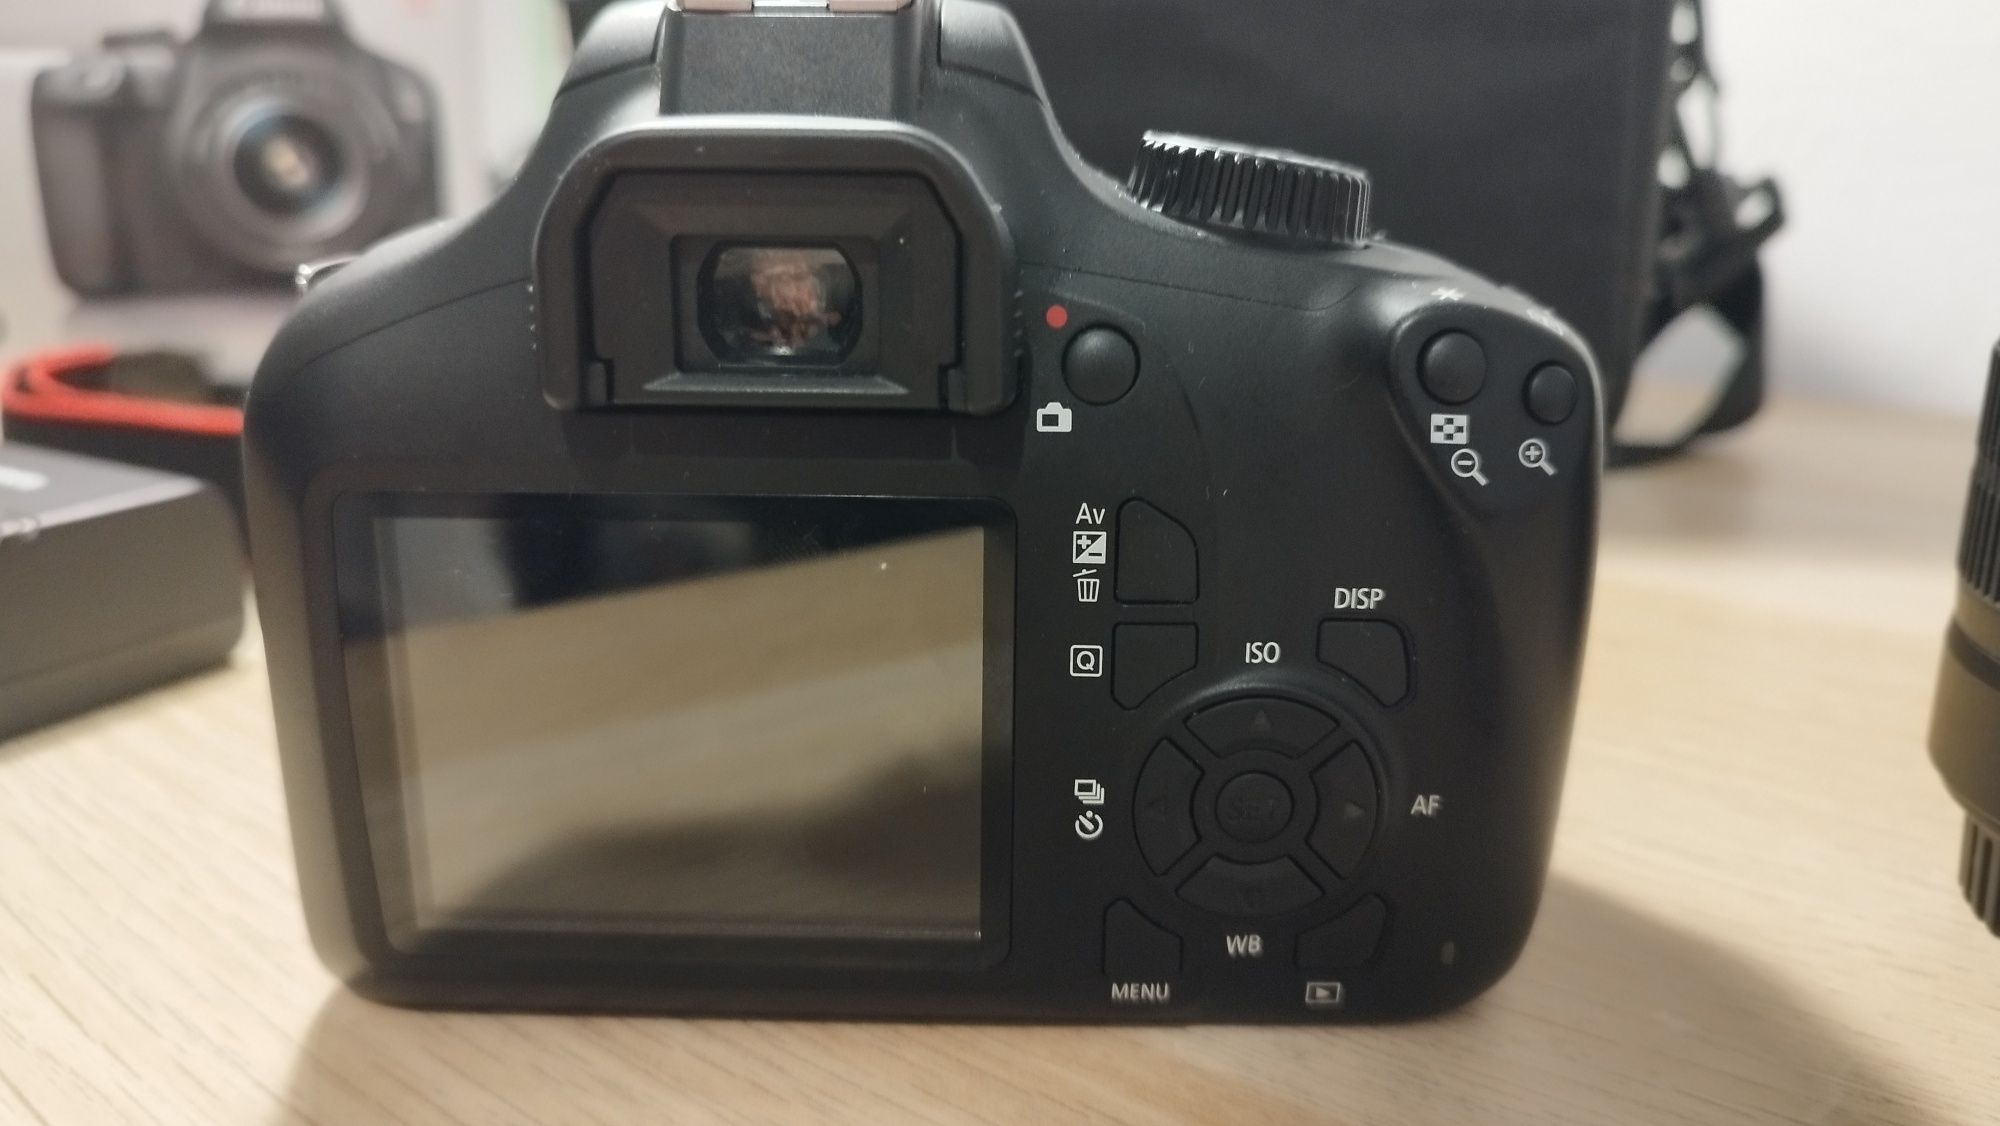 Canon EOS 4000D Black + Lente 18-55mm f/3.5 -5.6 EF-S III